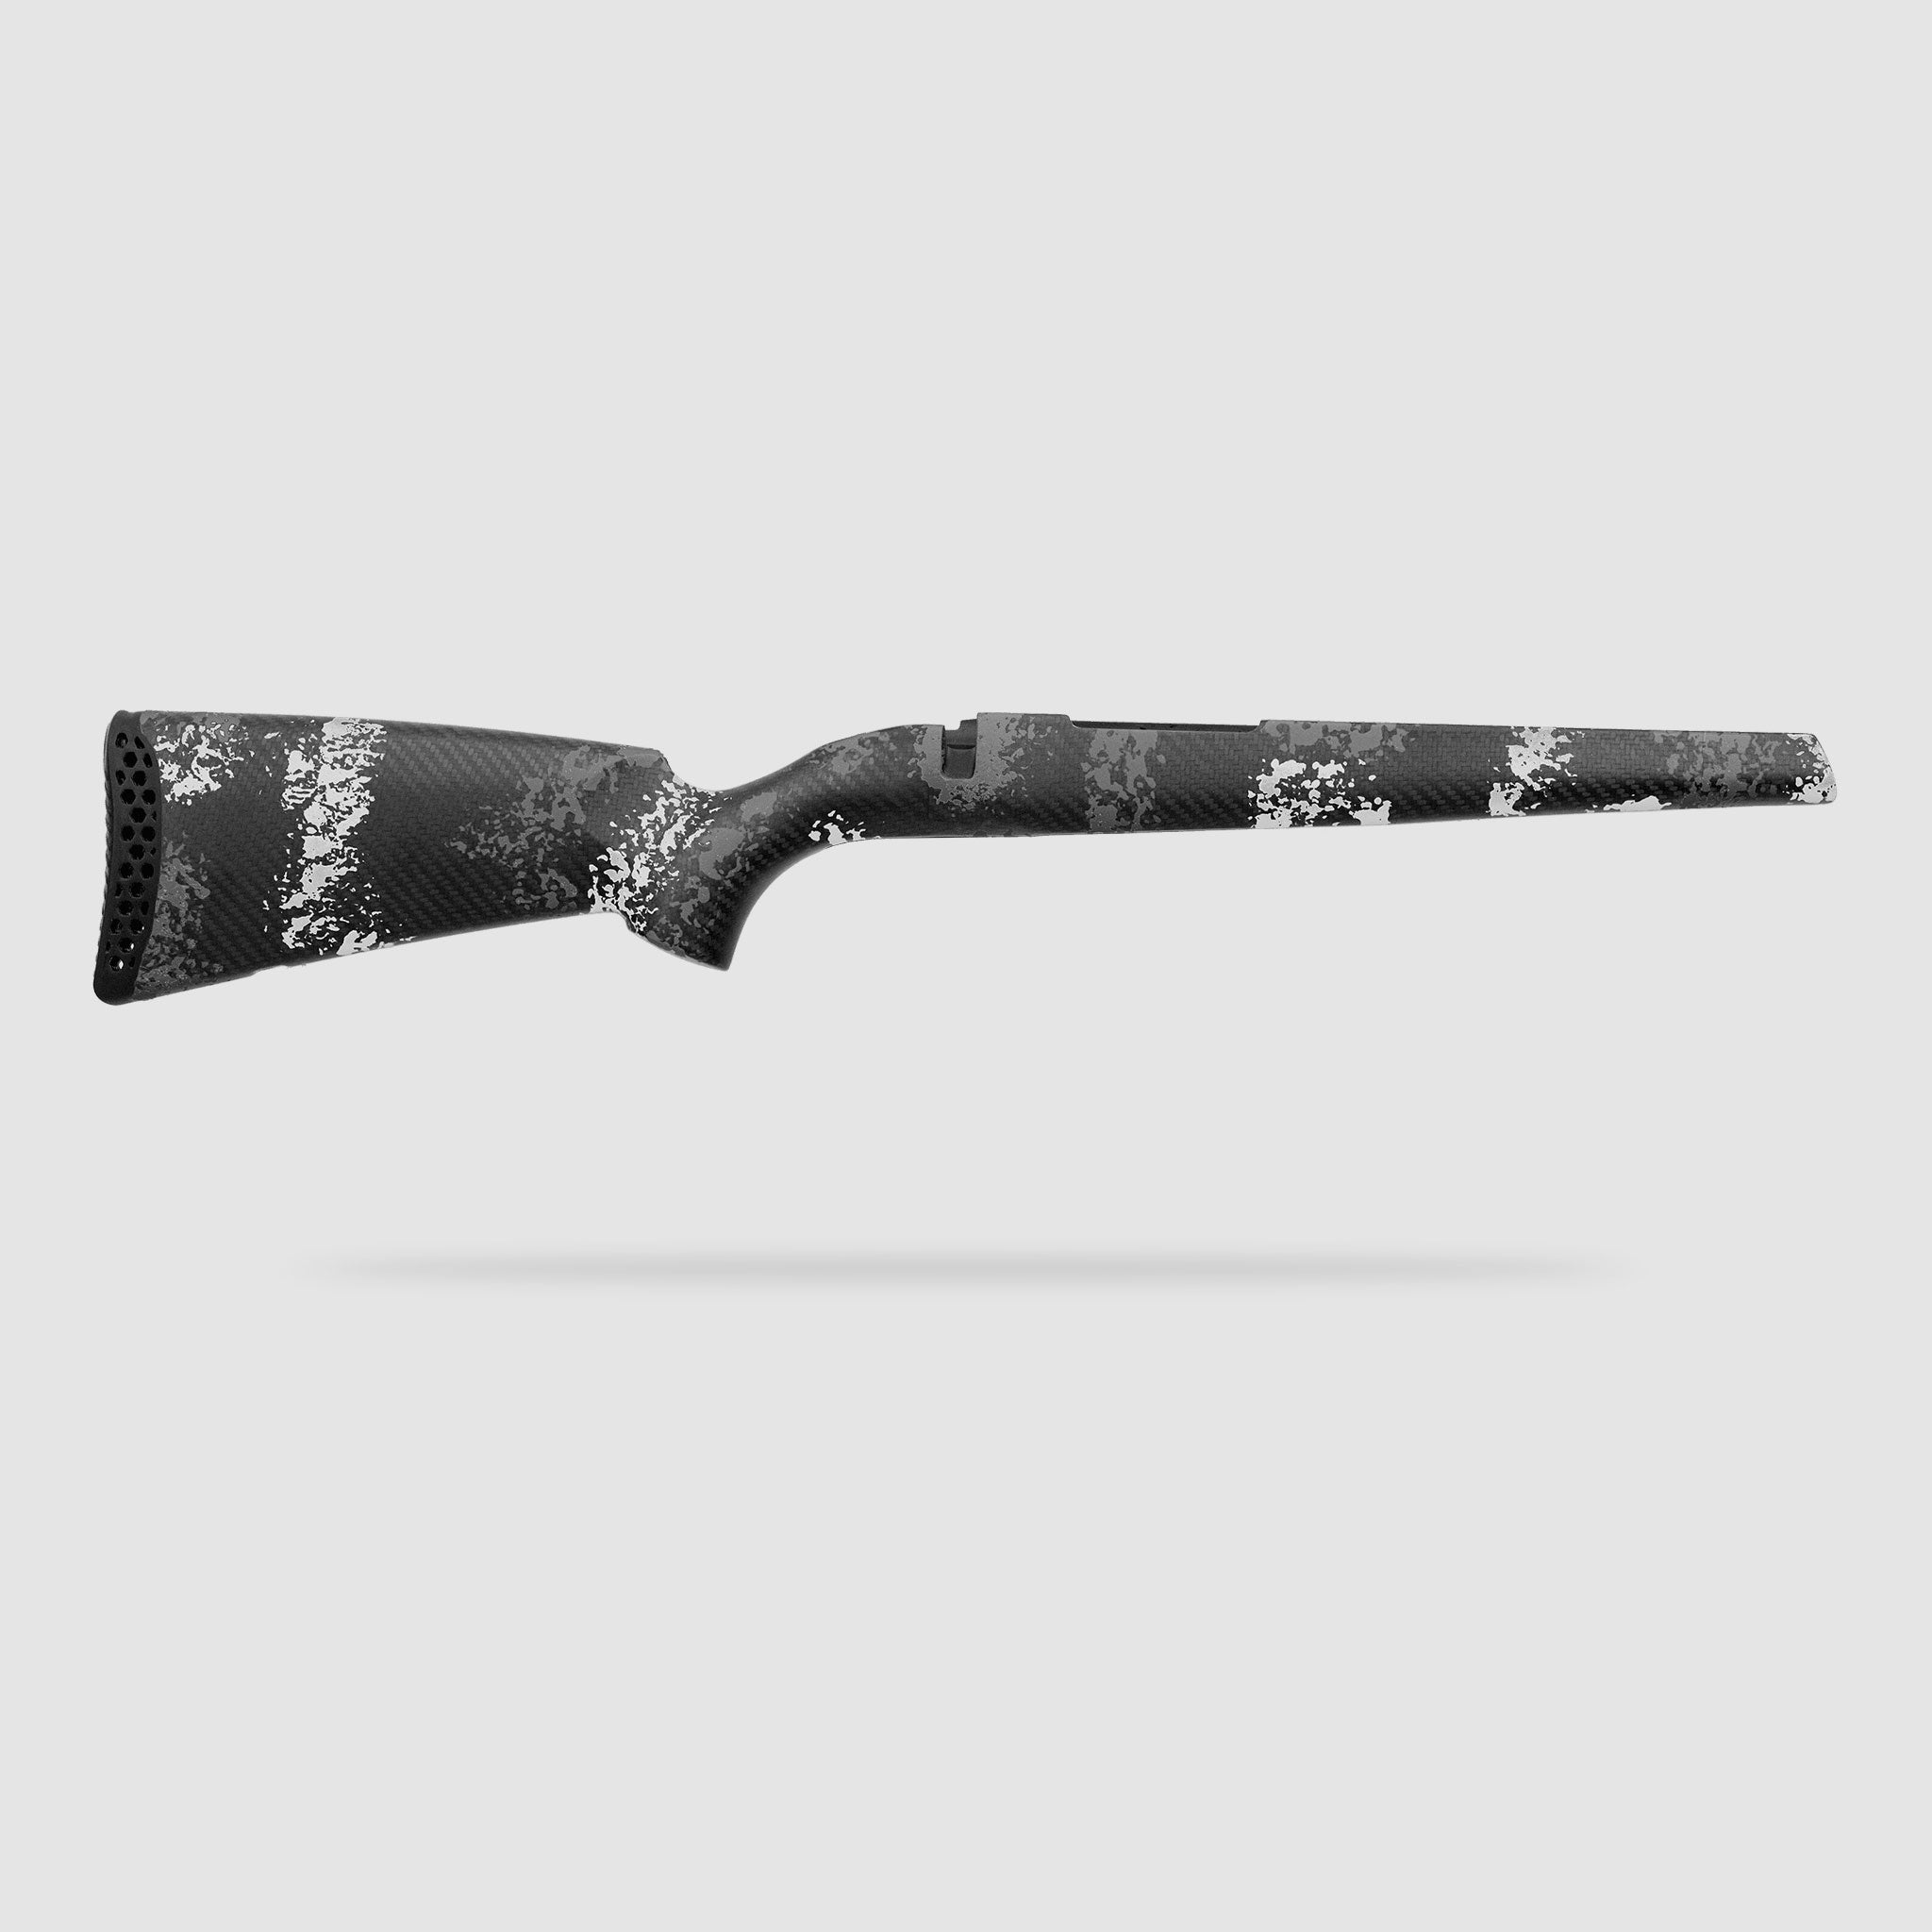 Blacktooth Remington700/Compatible Stock